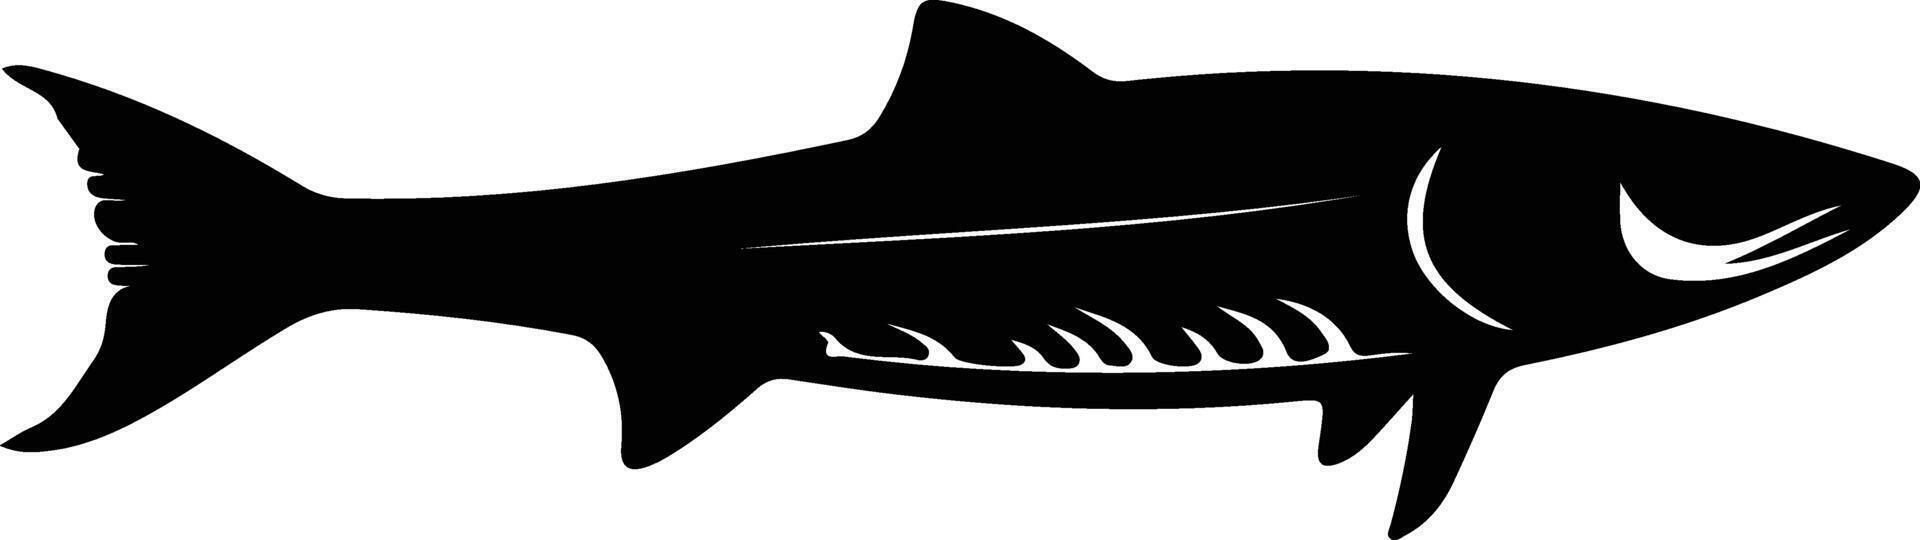 barracuda zwart silhouet vector